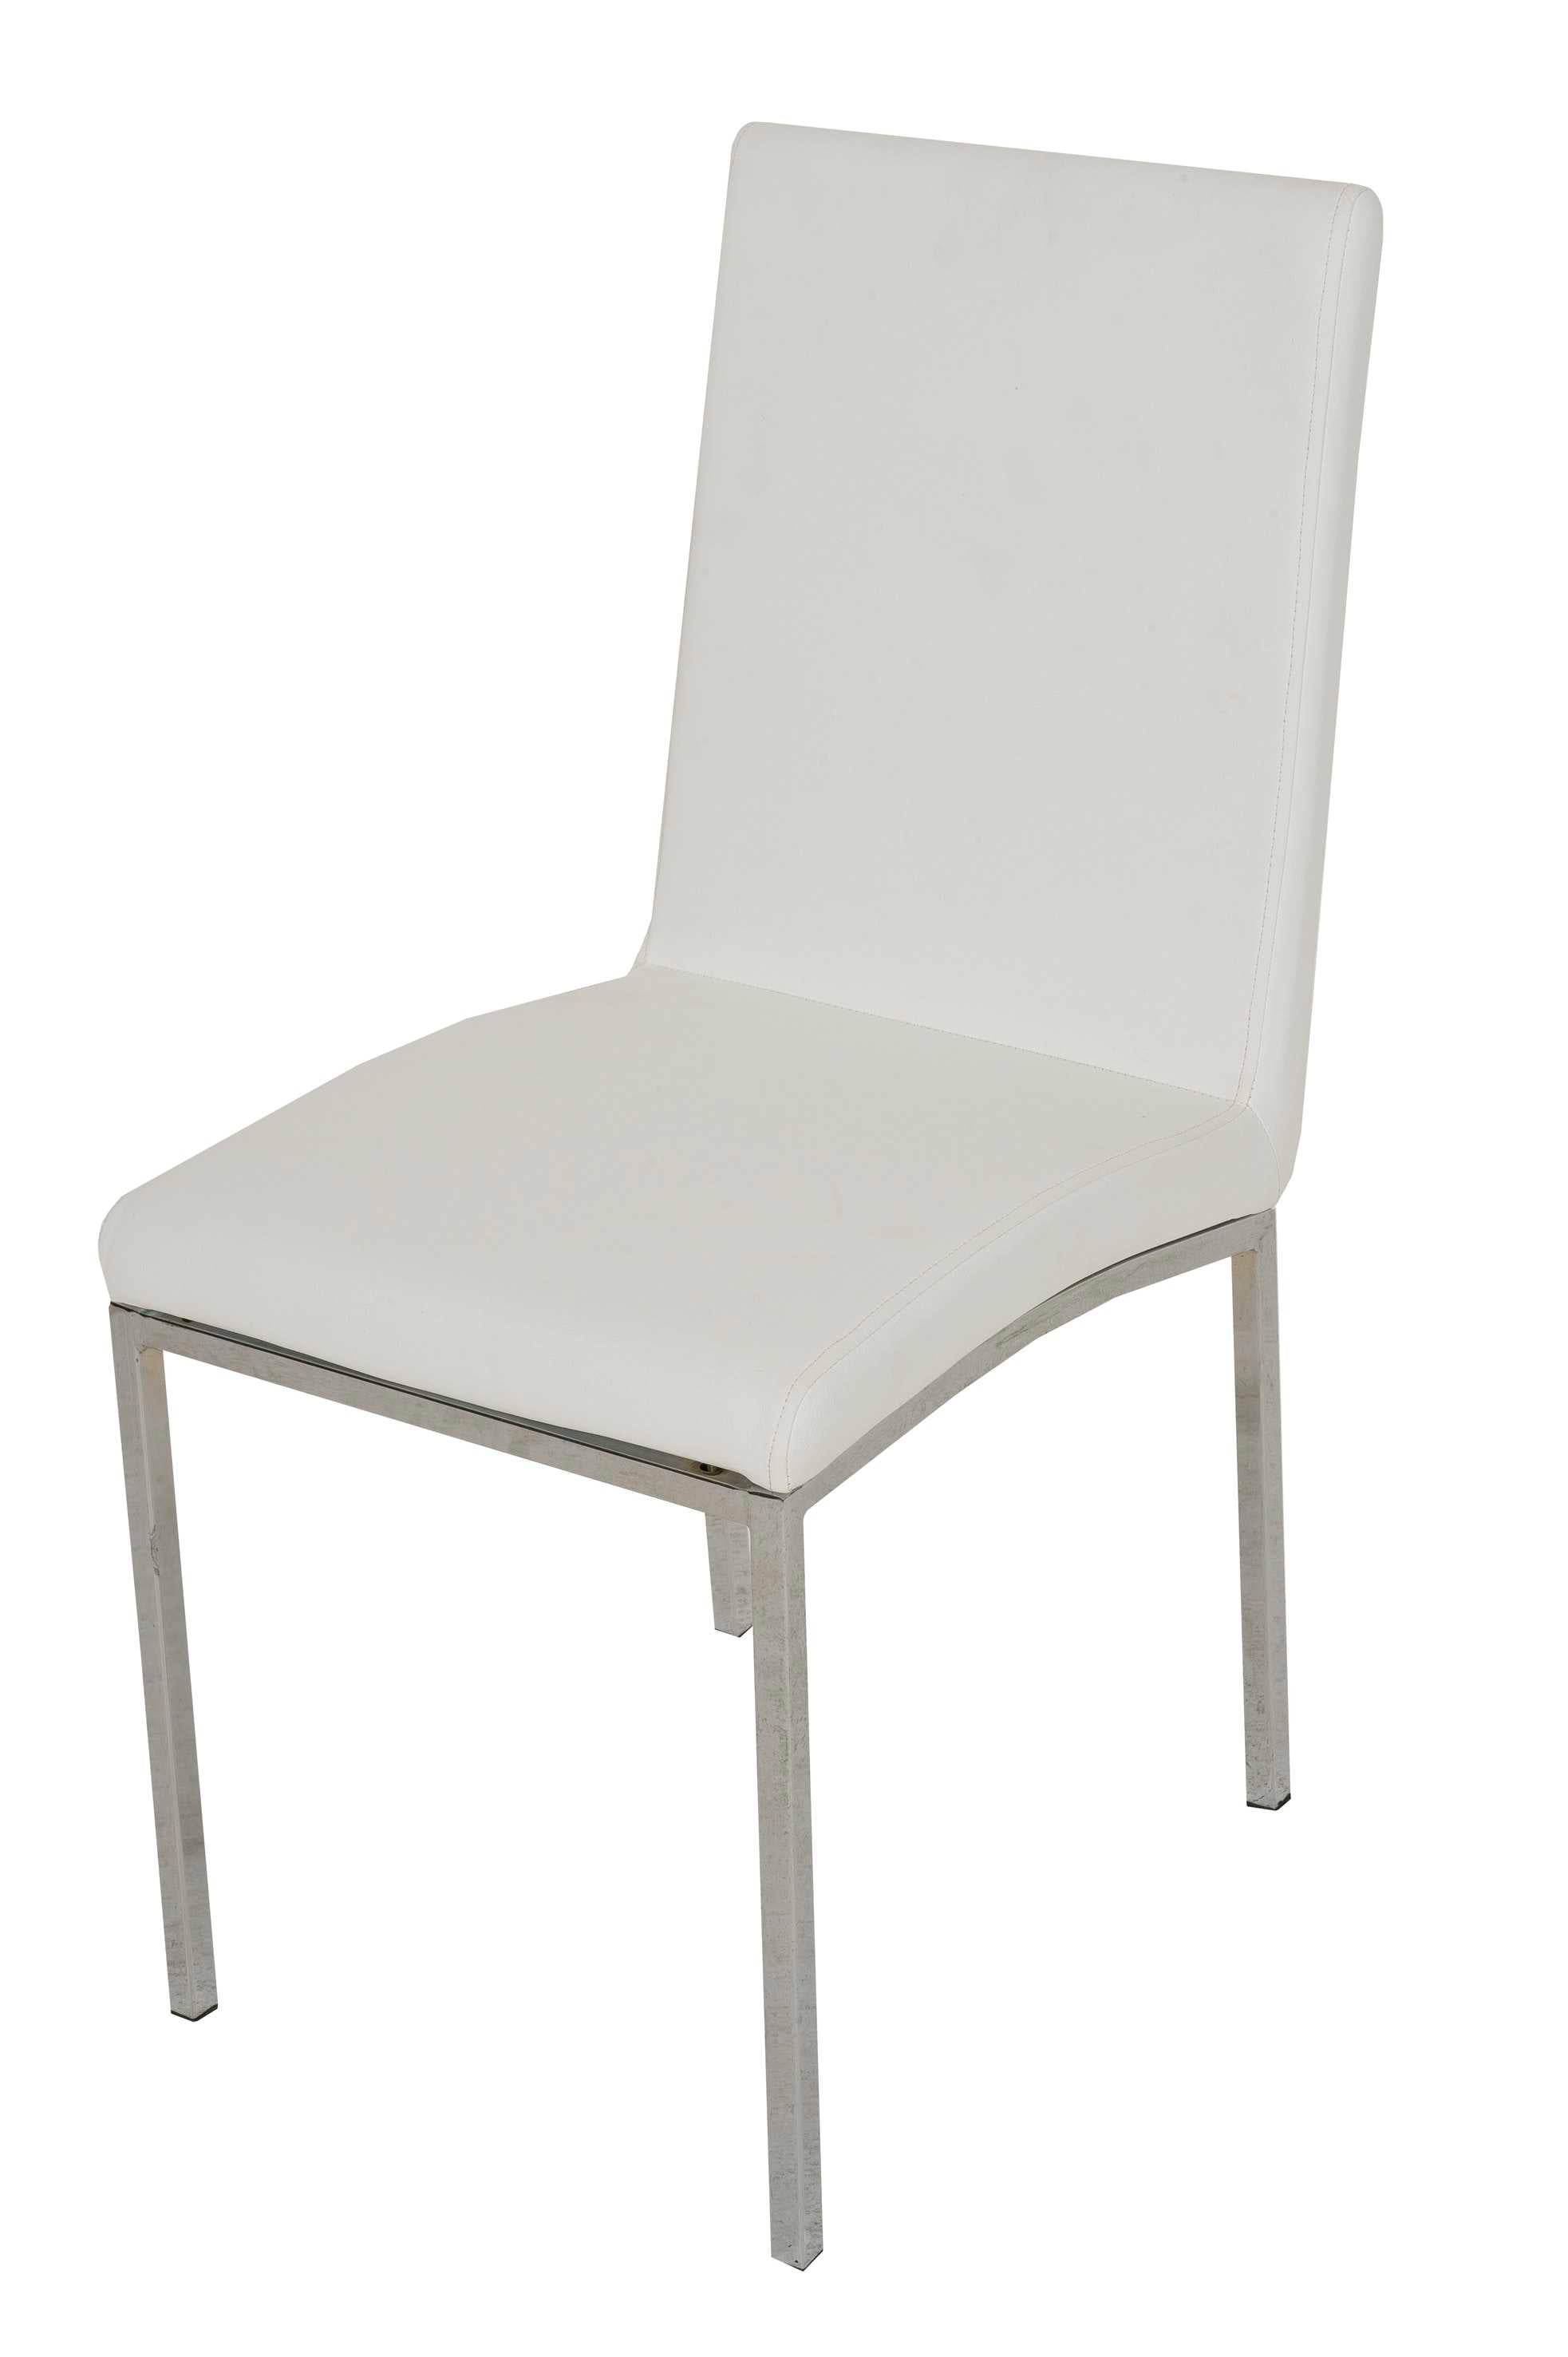 BT Bari Upholstered Chrome Legs Dining Chair